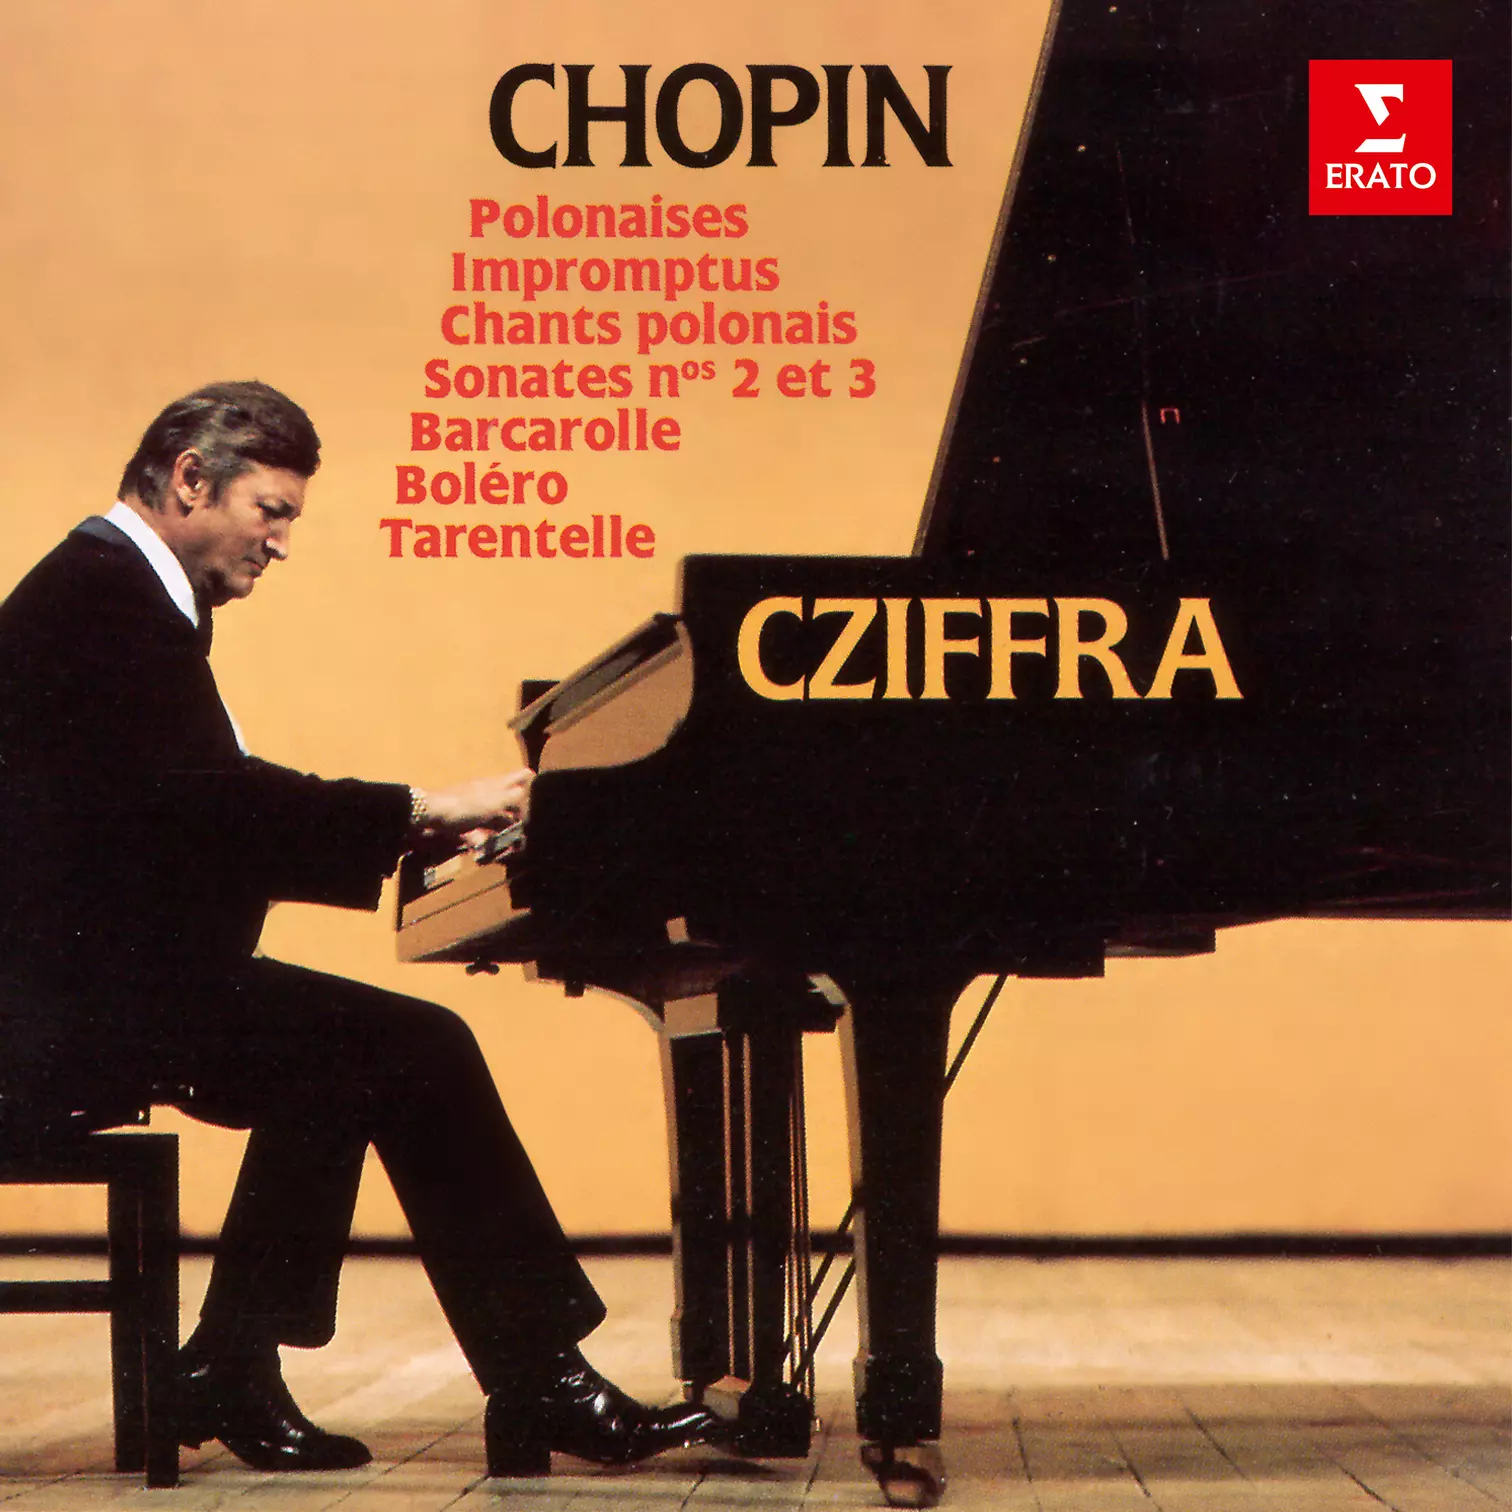 Chopin: Polonaises, Impromptus, Sonates, Barcarolle…